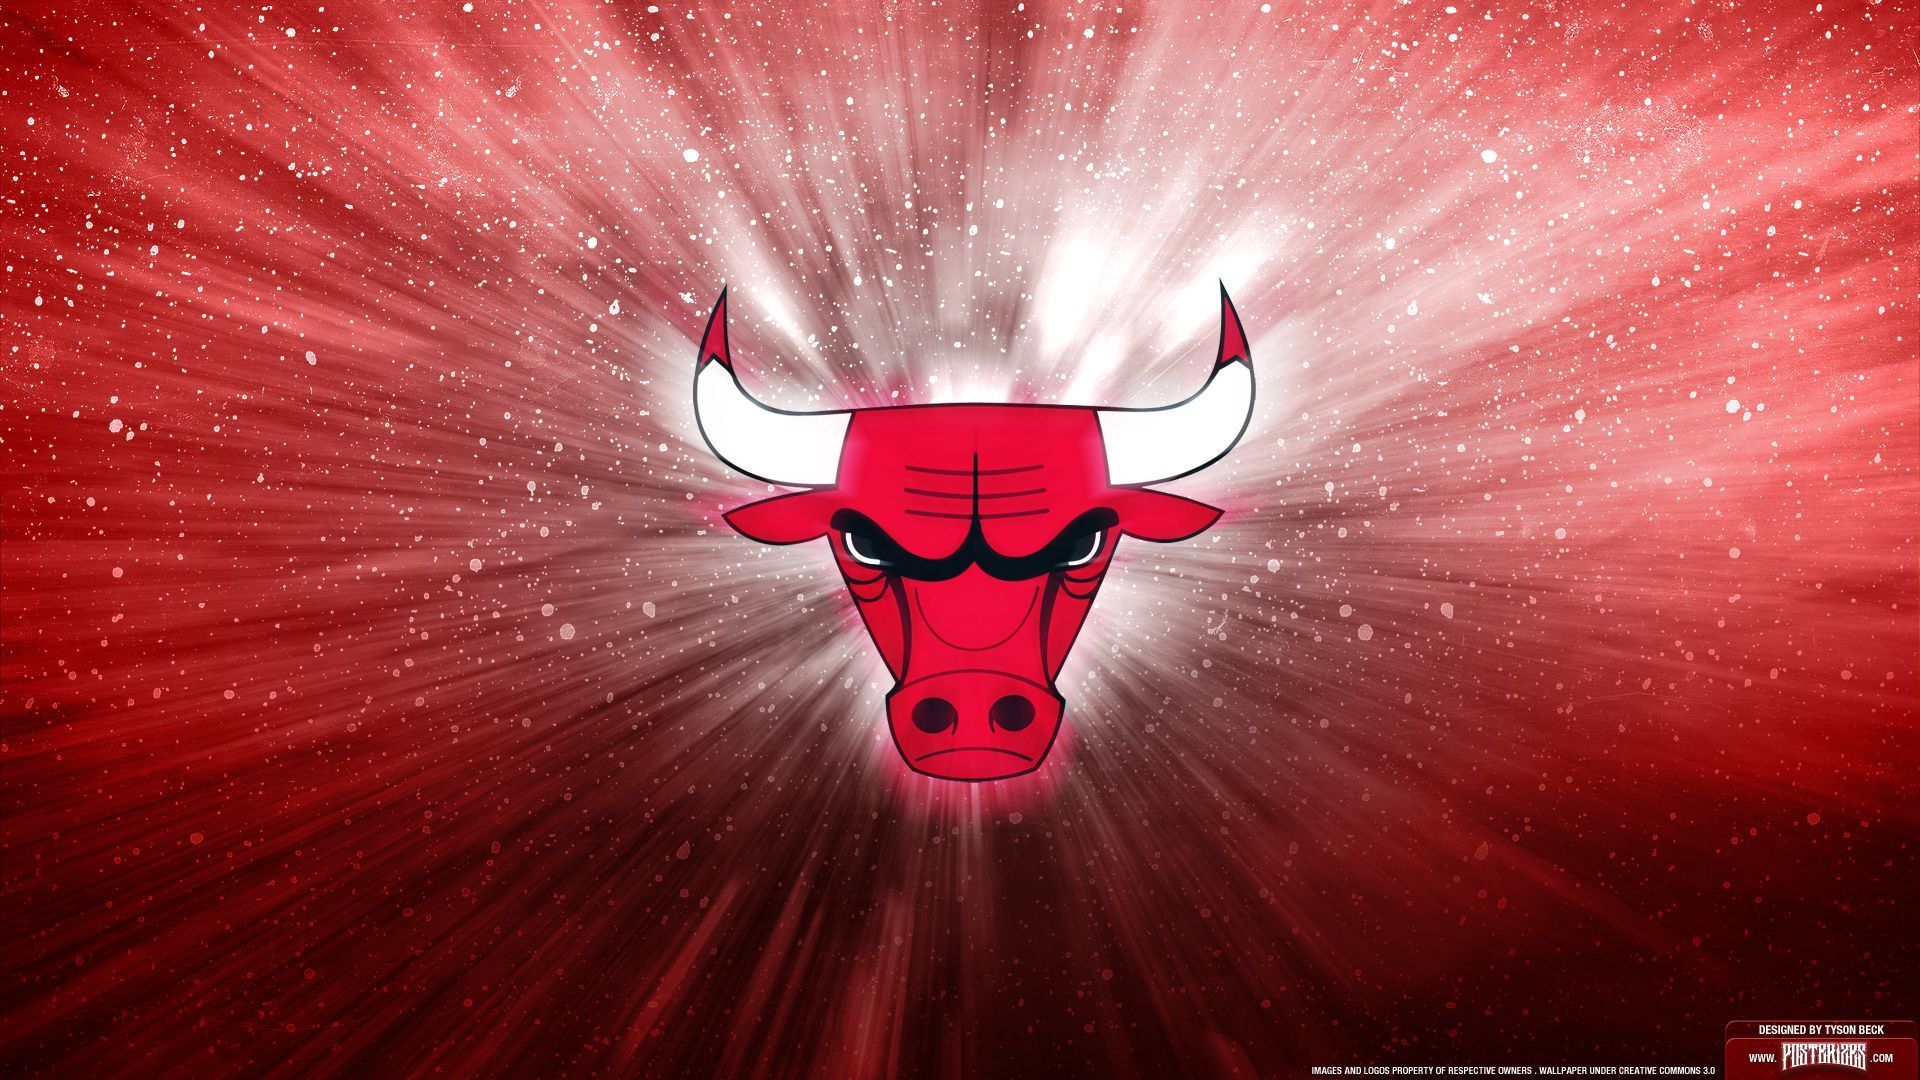 Chicago Bulls Background